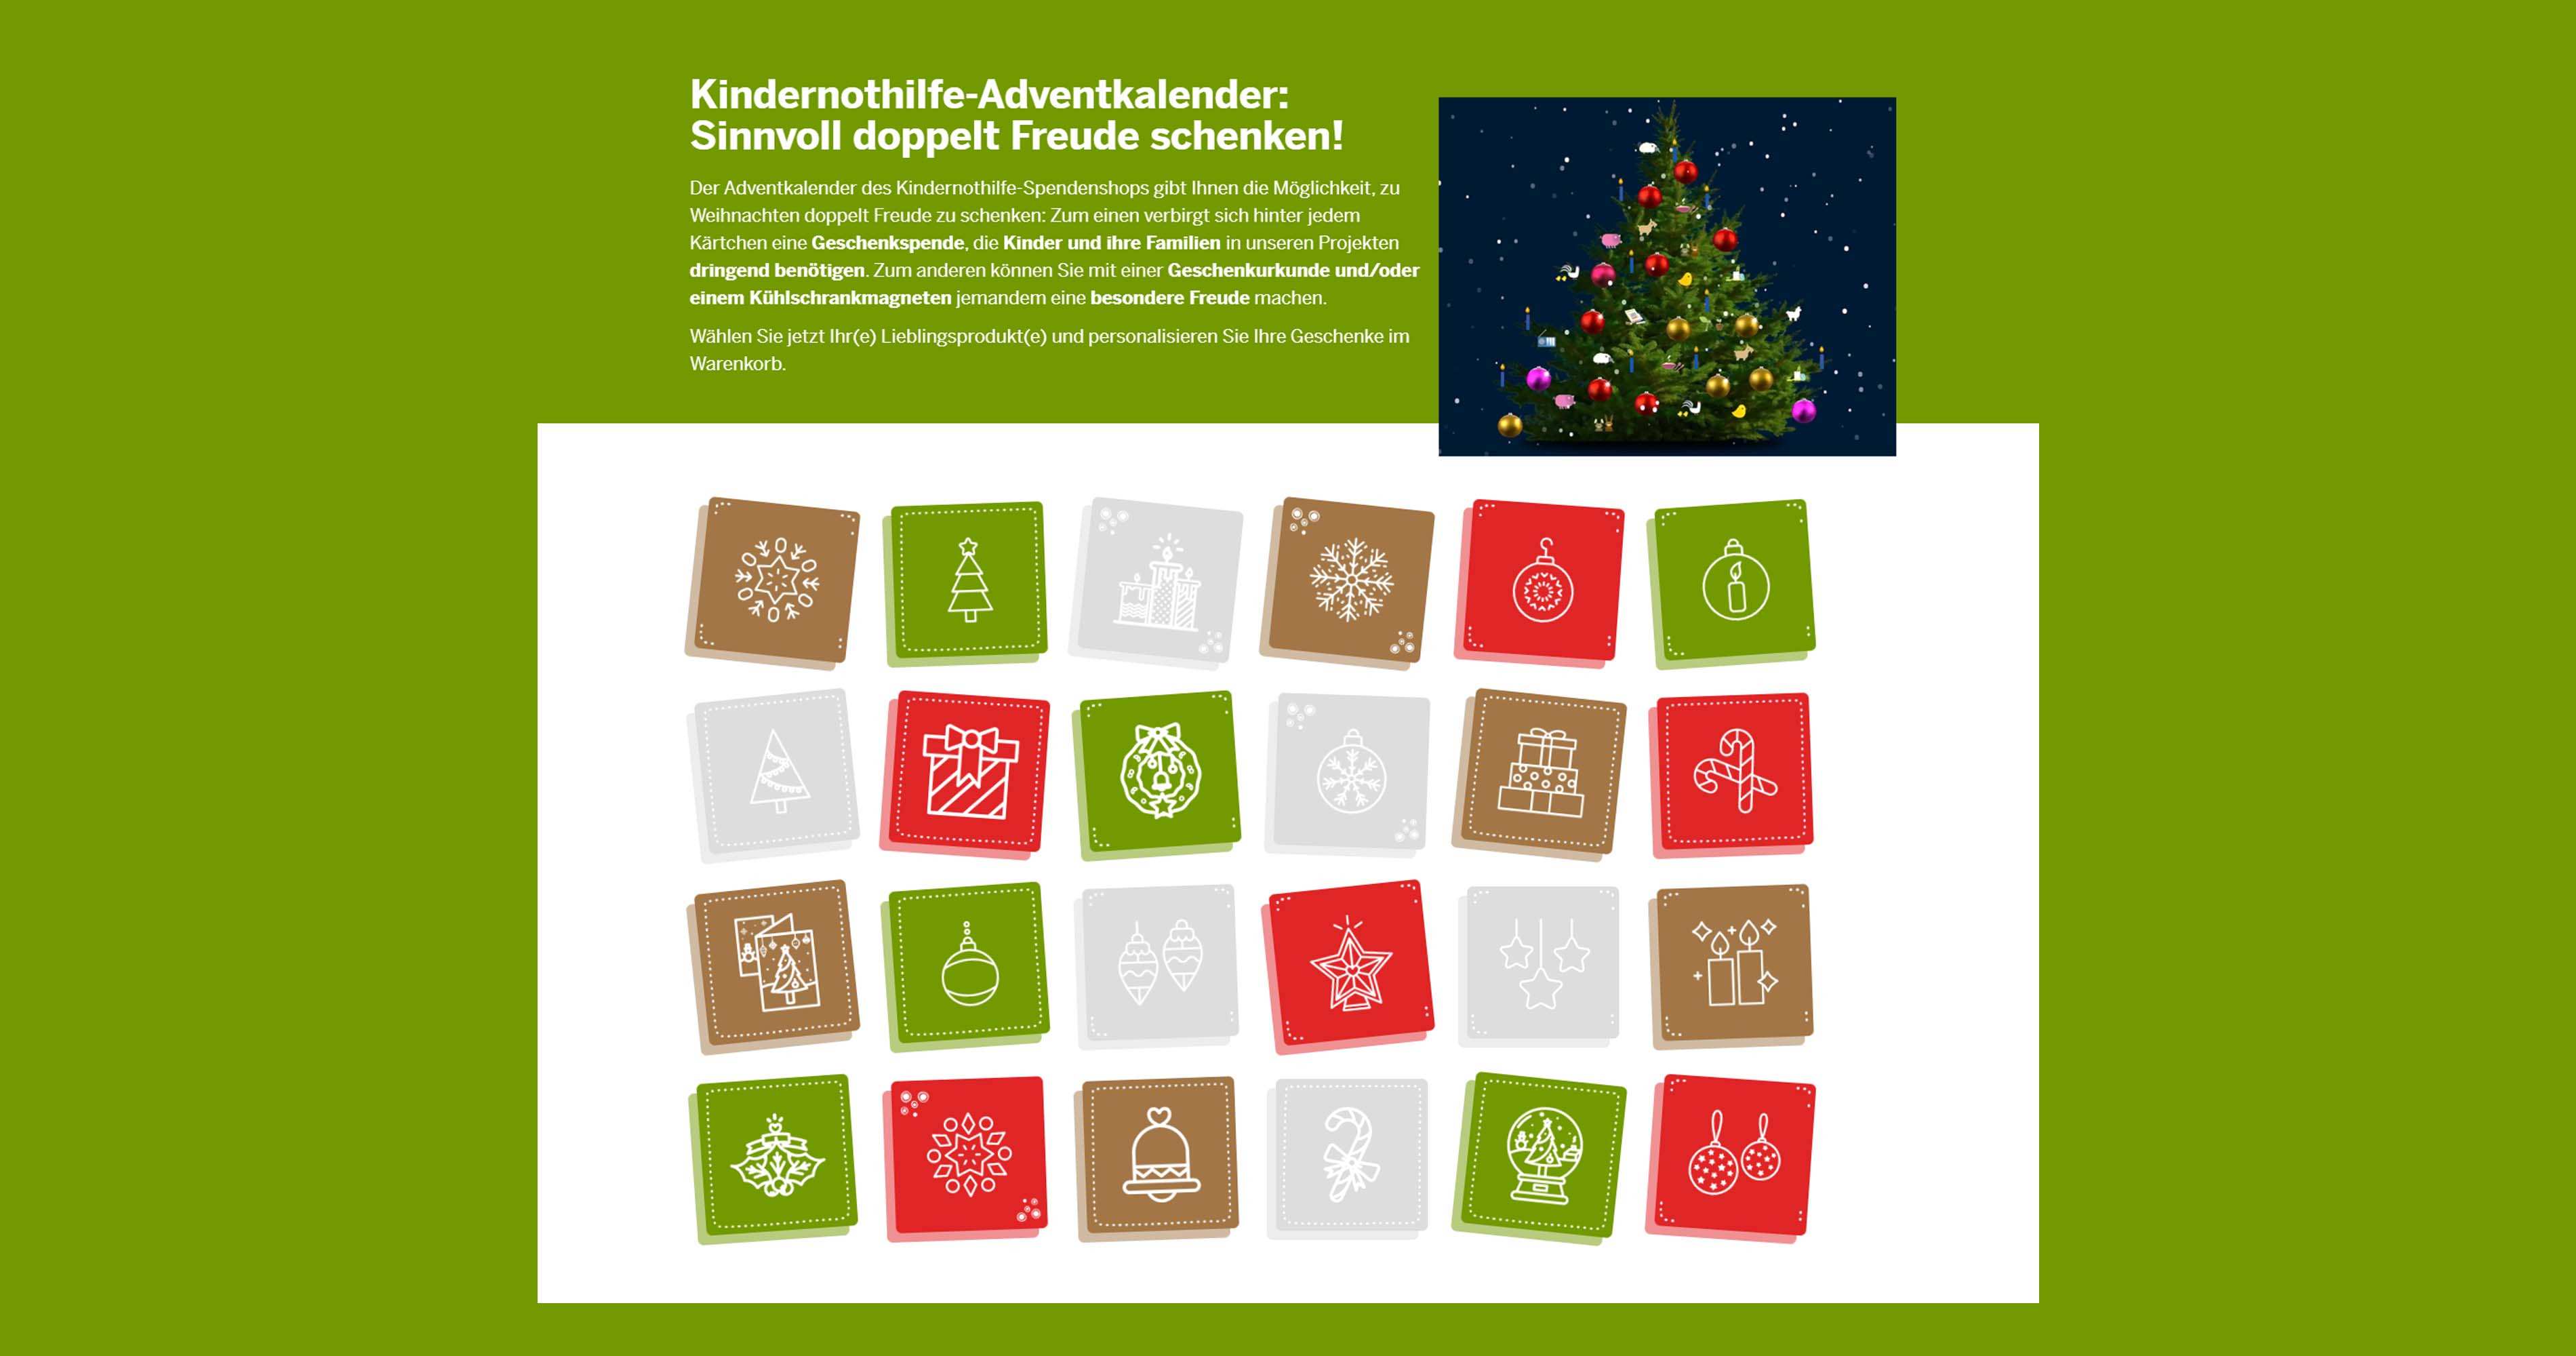 Kindernothilfe Adventkalender
Österreich